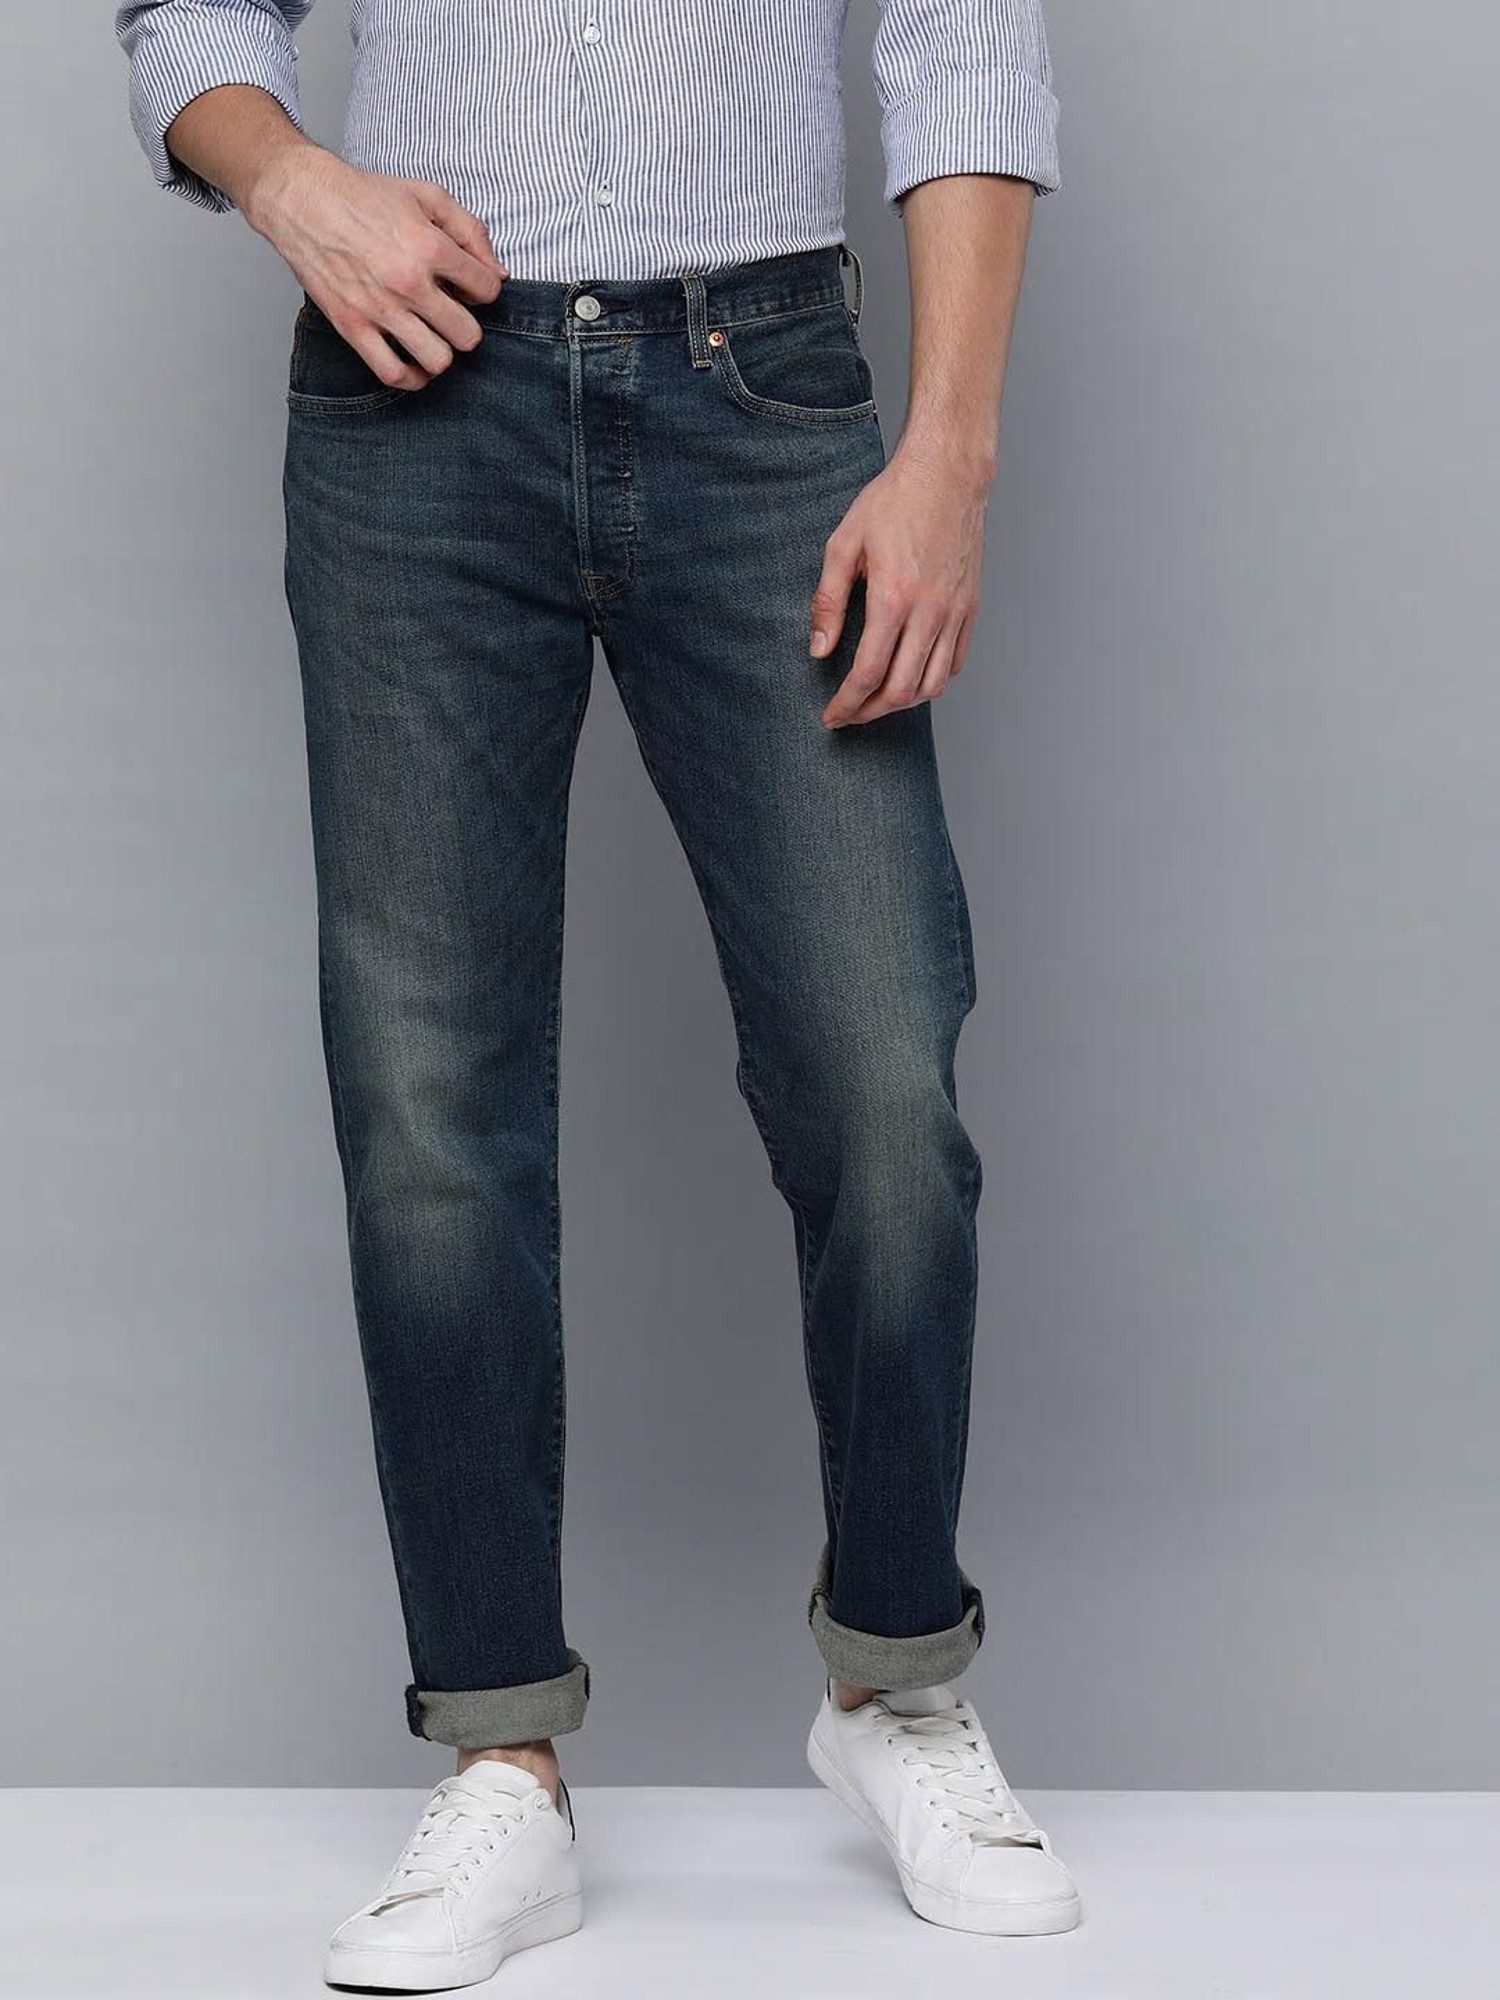 Buy Levi'S 501 Mid Indigo Straight Fit Jeans For Men Online @ Tata Cliq